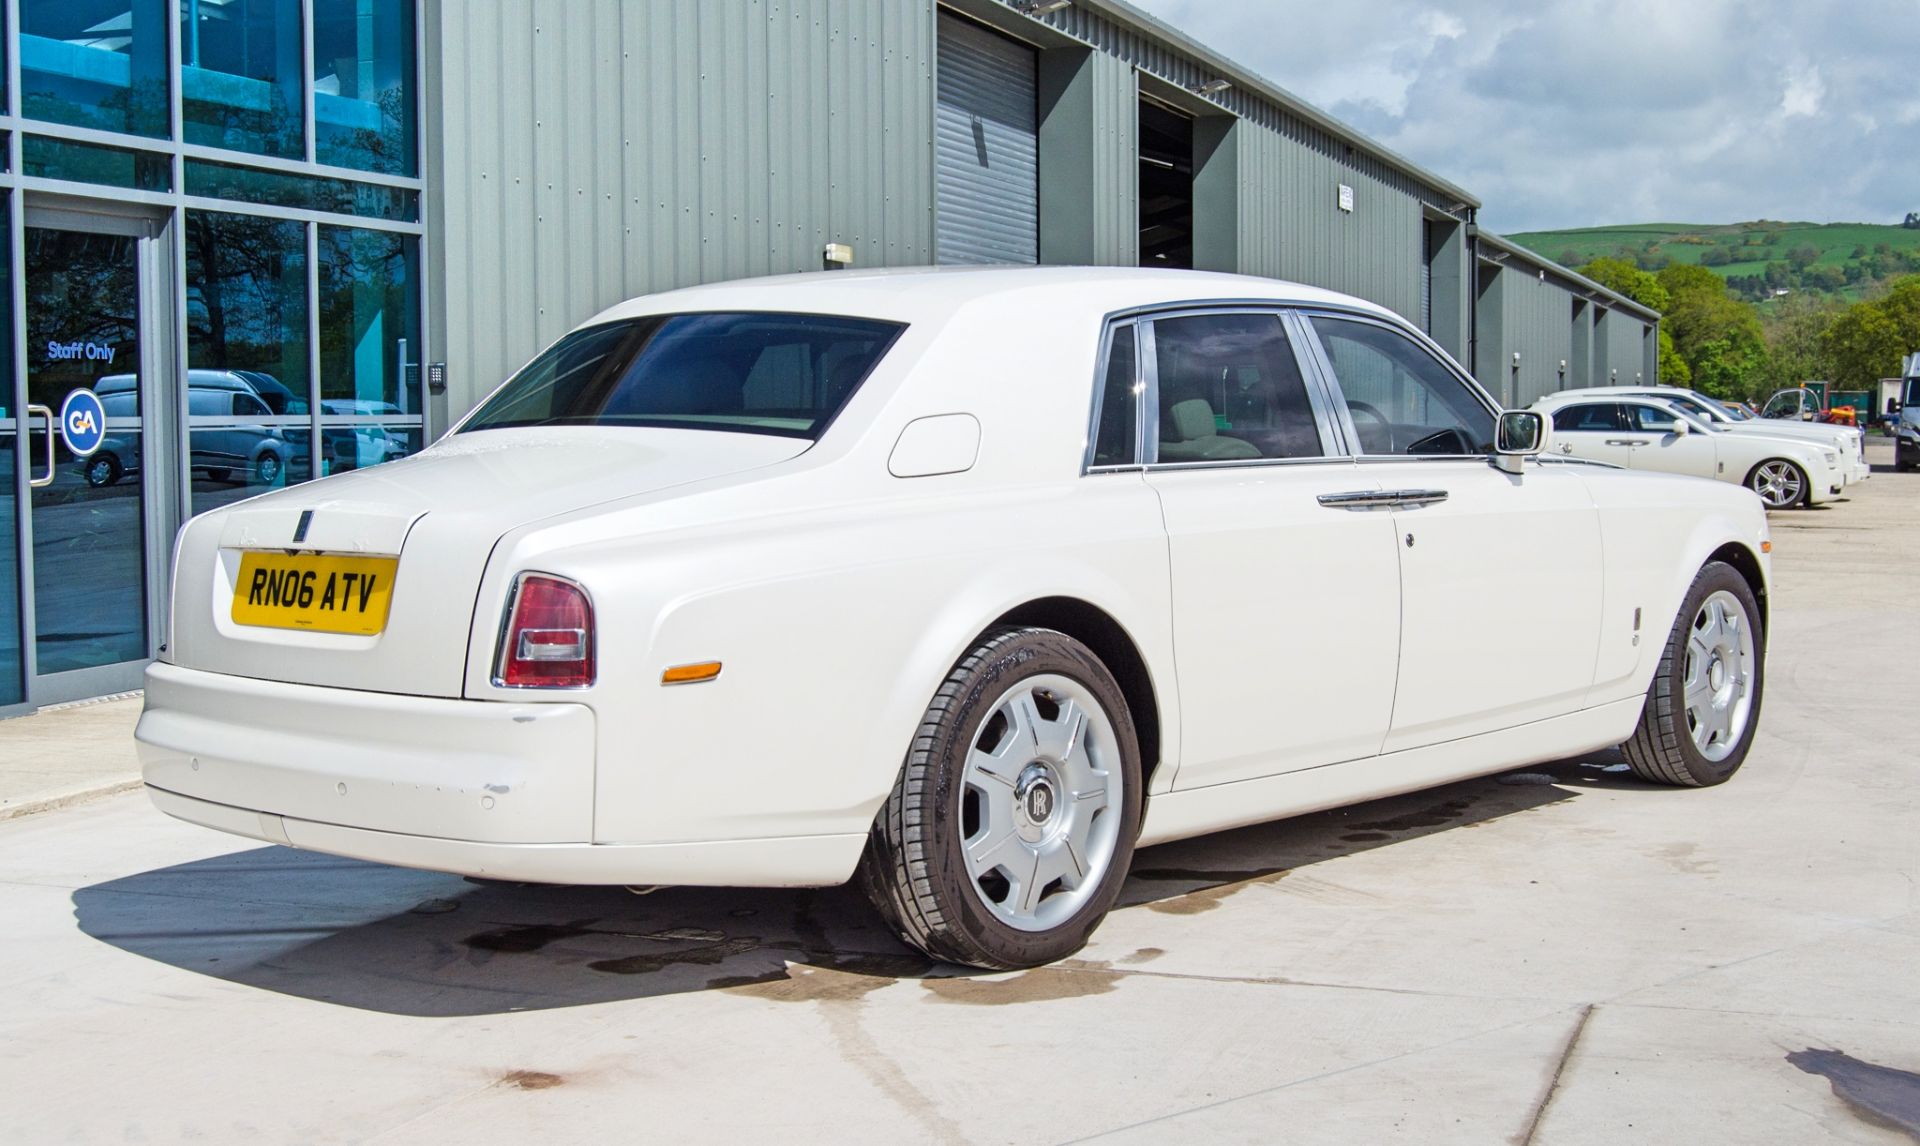 Rolls Royce Phantom 6749cc V12 Auto 4 door saloon car Registration Number: RN06 ATV Date of - Image 5 of 52